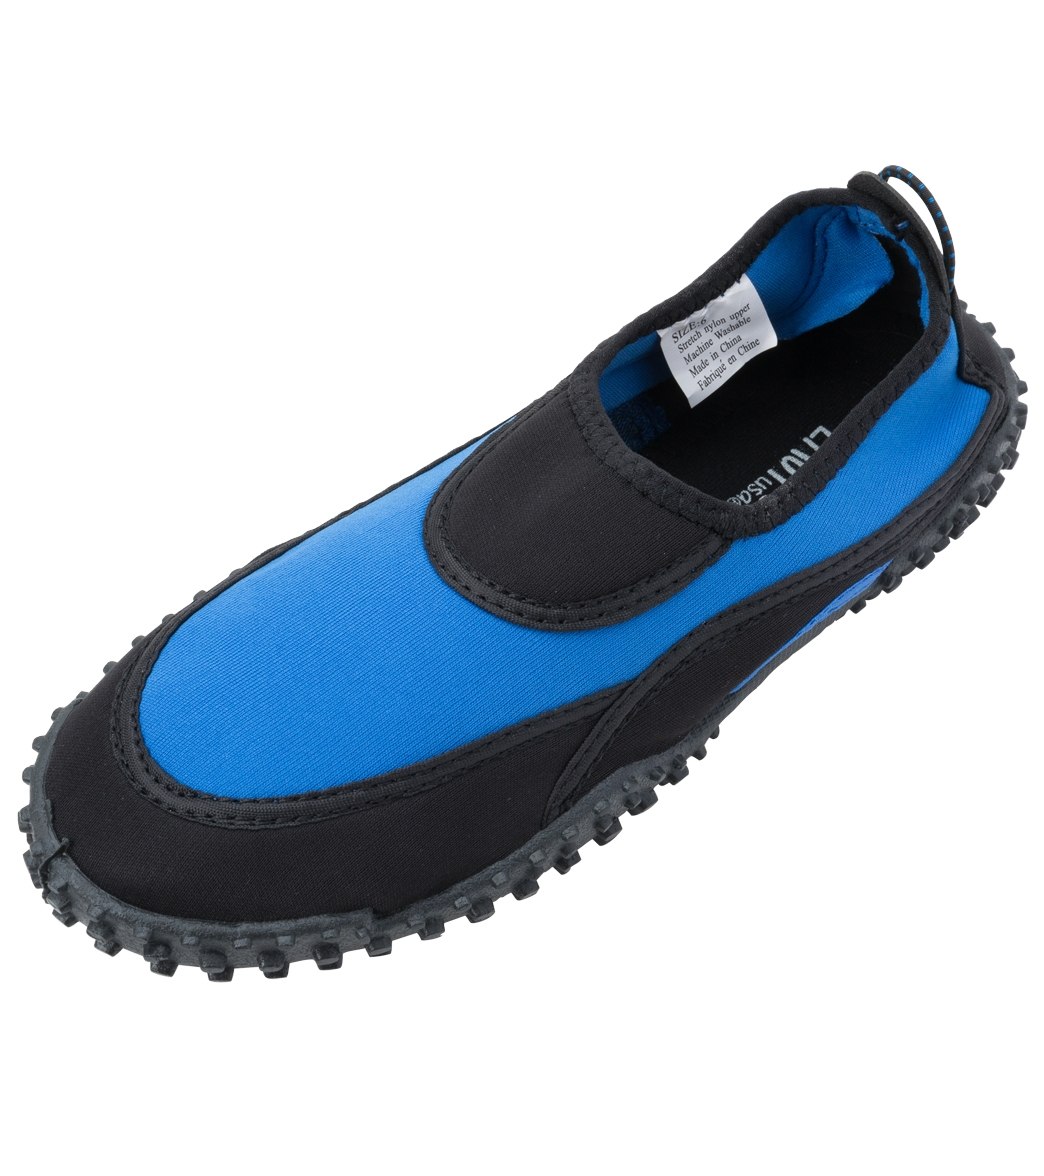 Easy USA Women's Water Shoes | eBay